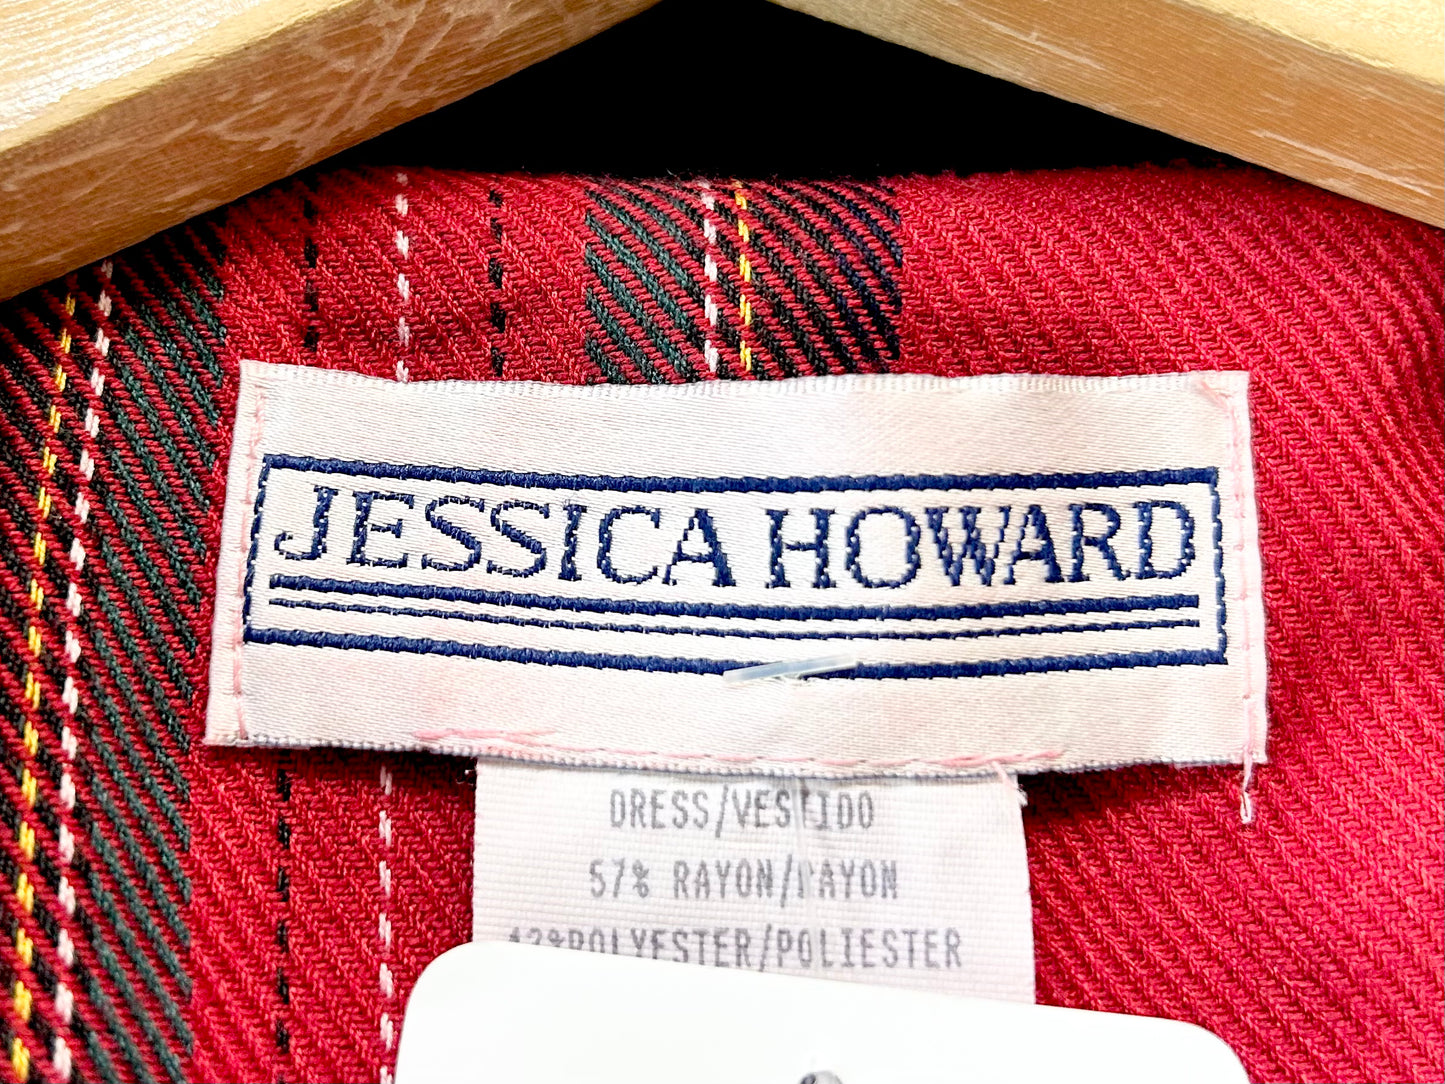 Vintage Plaid Dress JESSICA HOWARD [I25062]